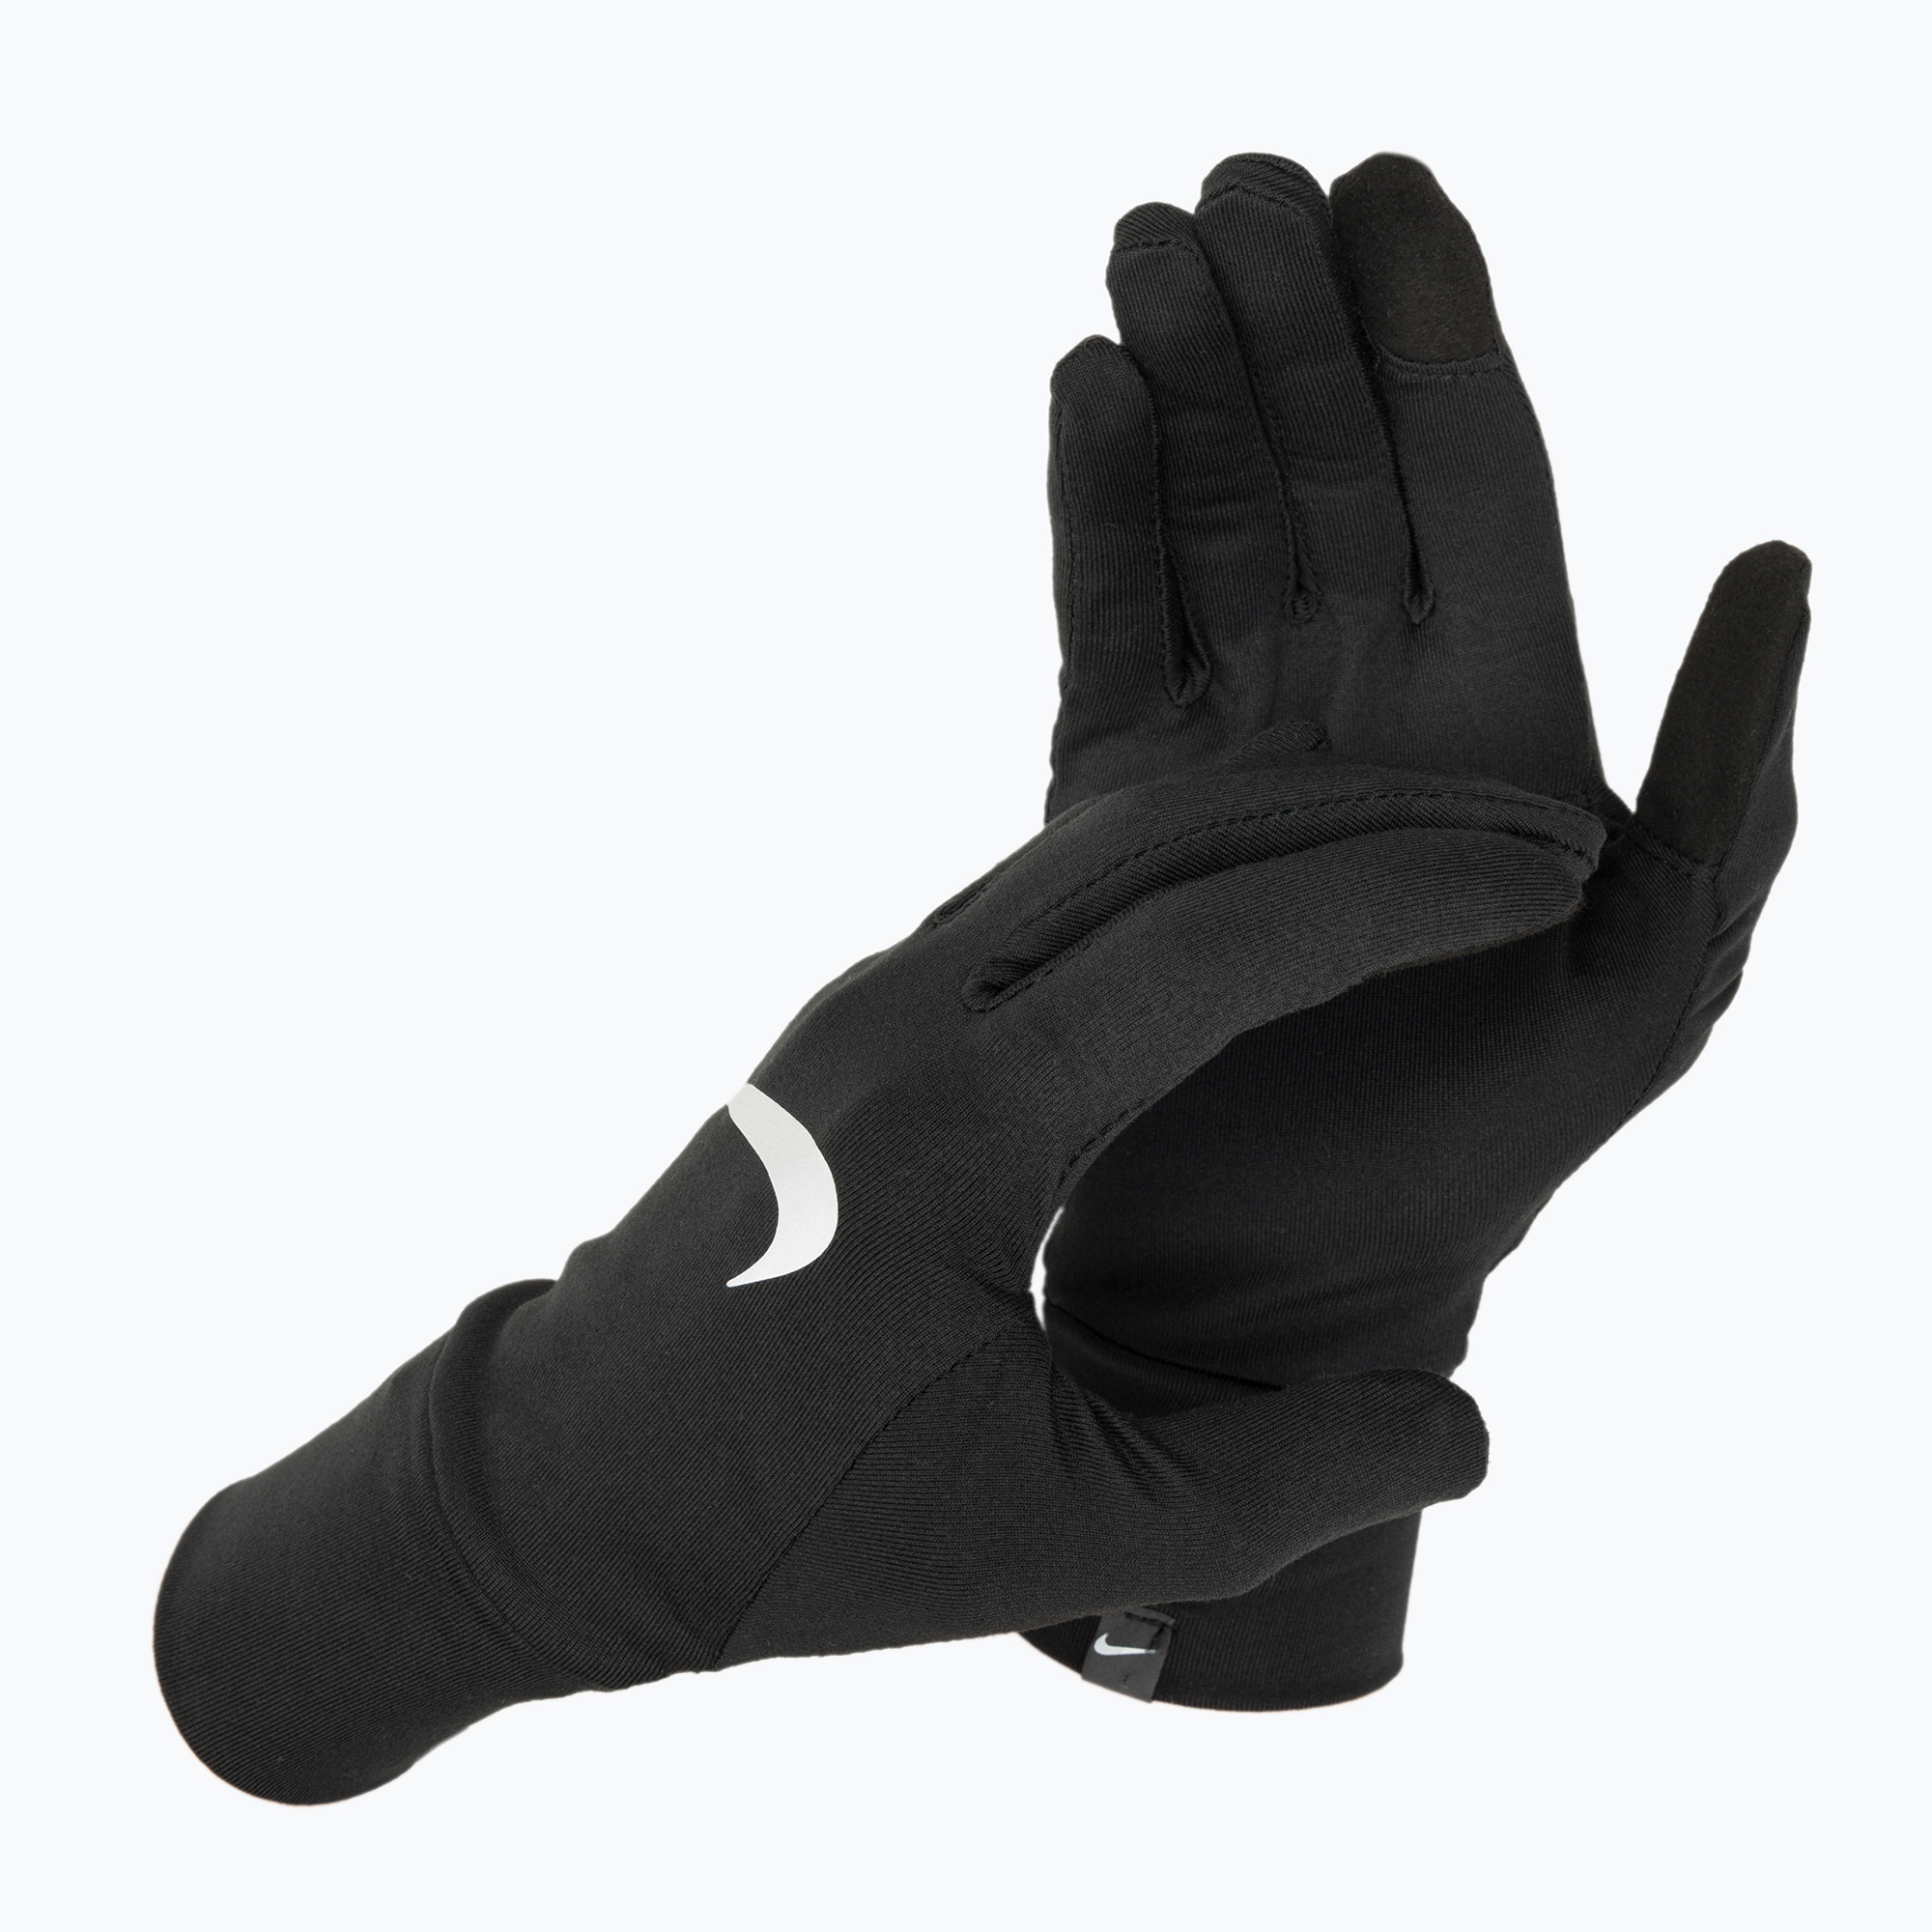 Дамски ръкавици за бягане Nike Accelerate RG black/black/silver